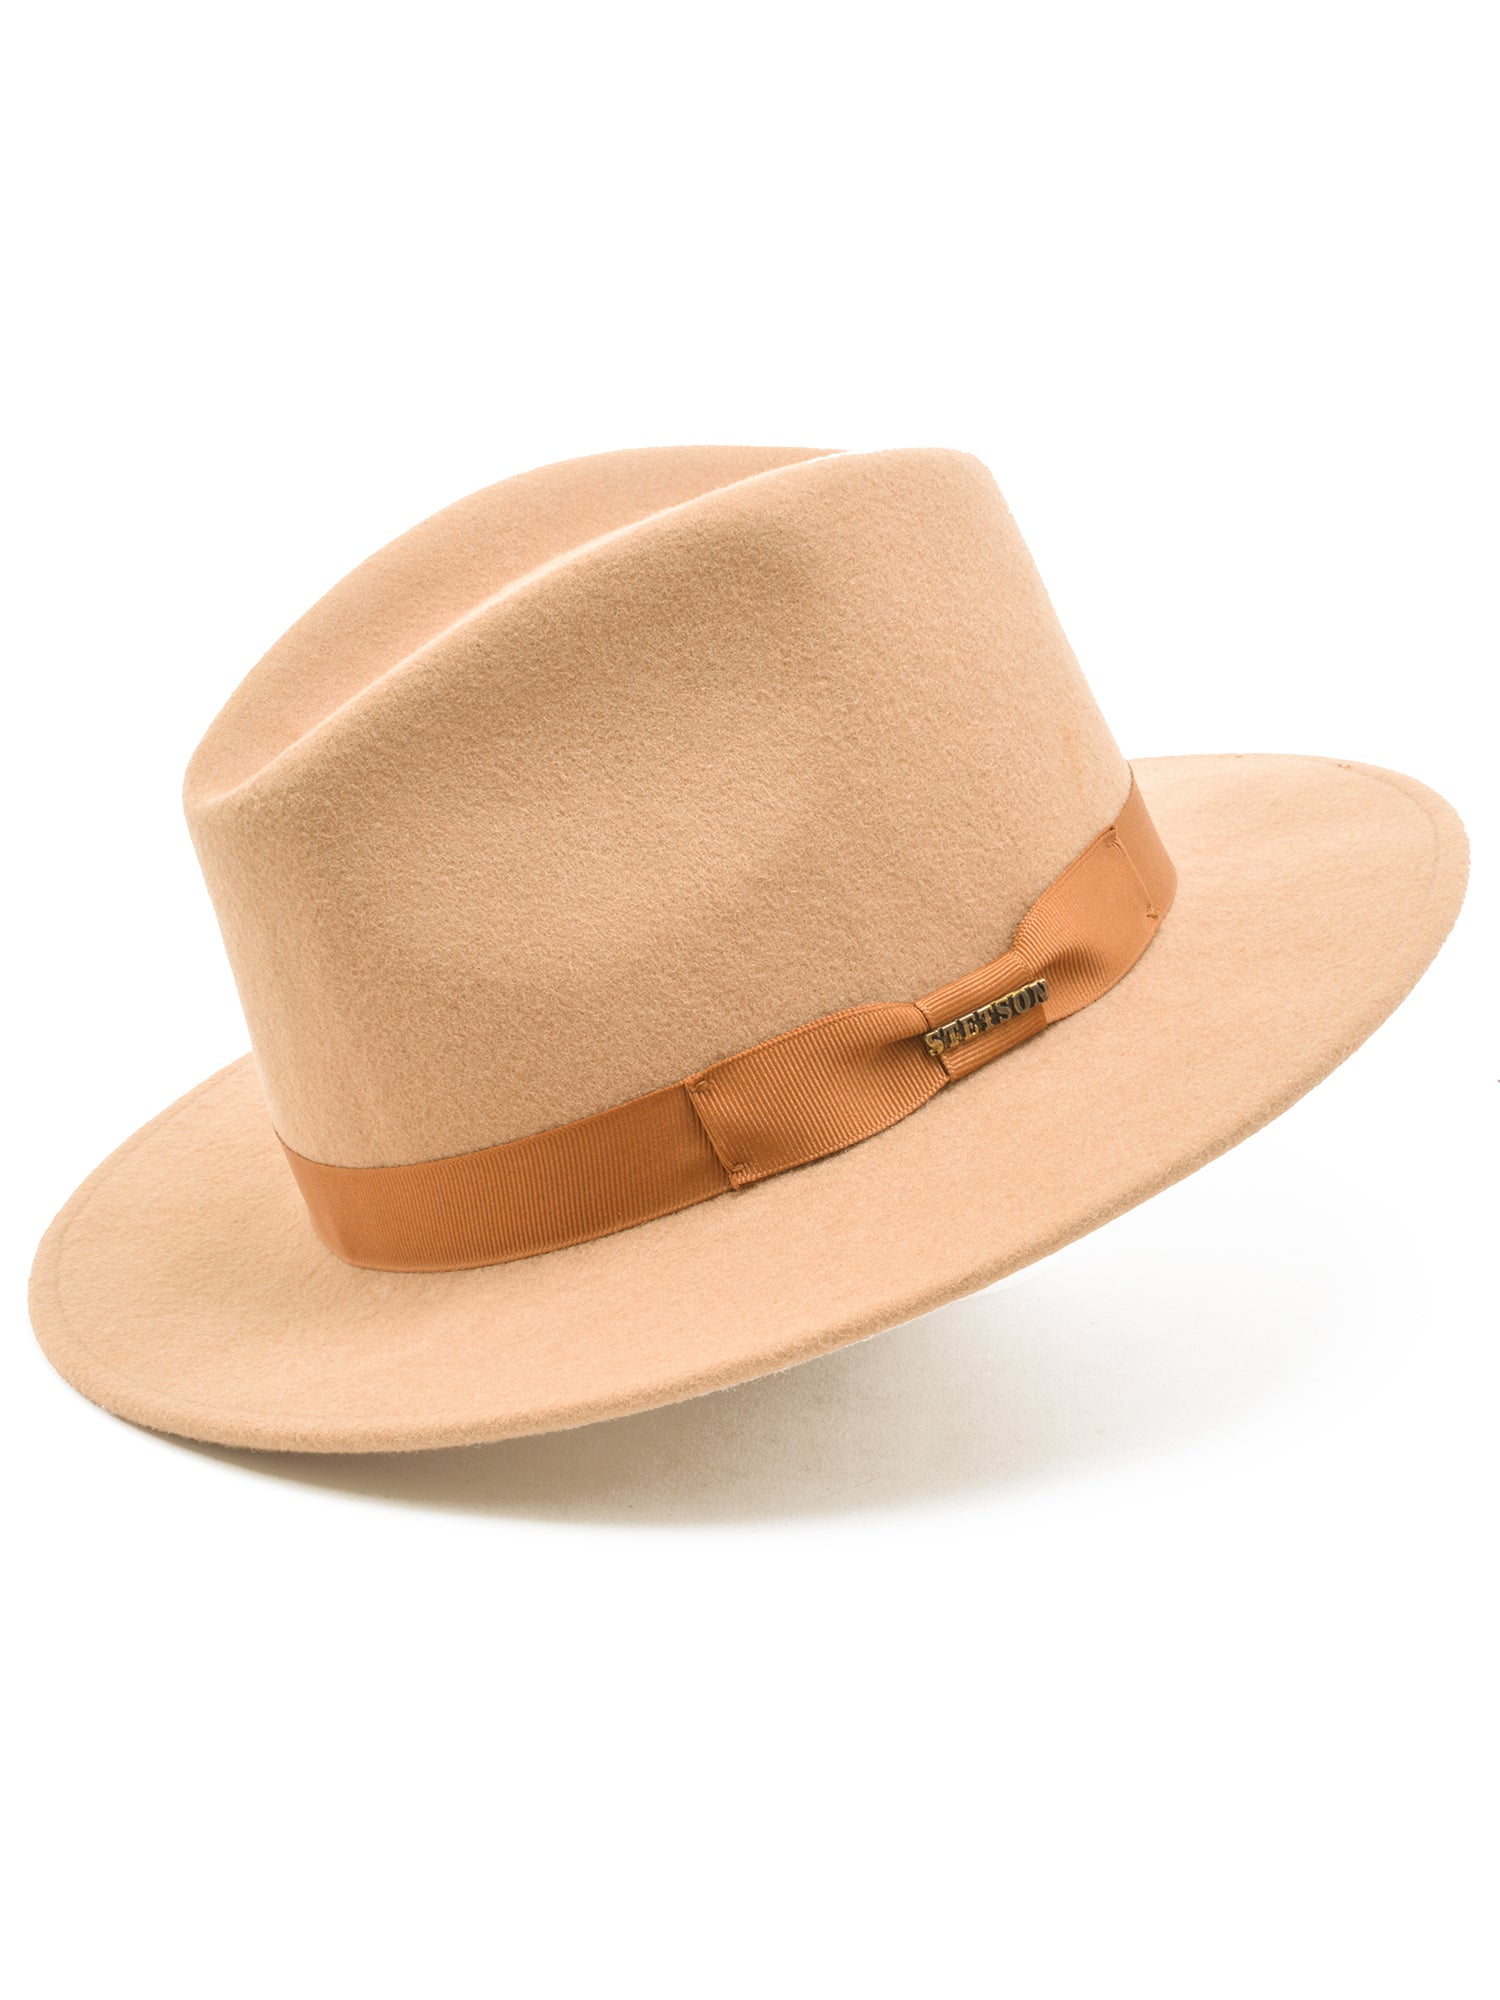 Stetson Wool Felt Markham Pinch Front Cowboy Hat in Light Beige